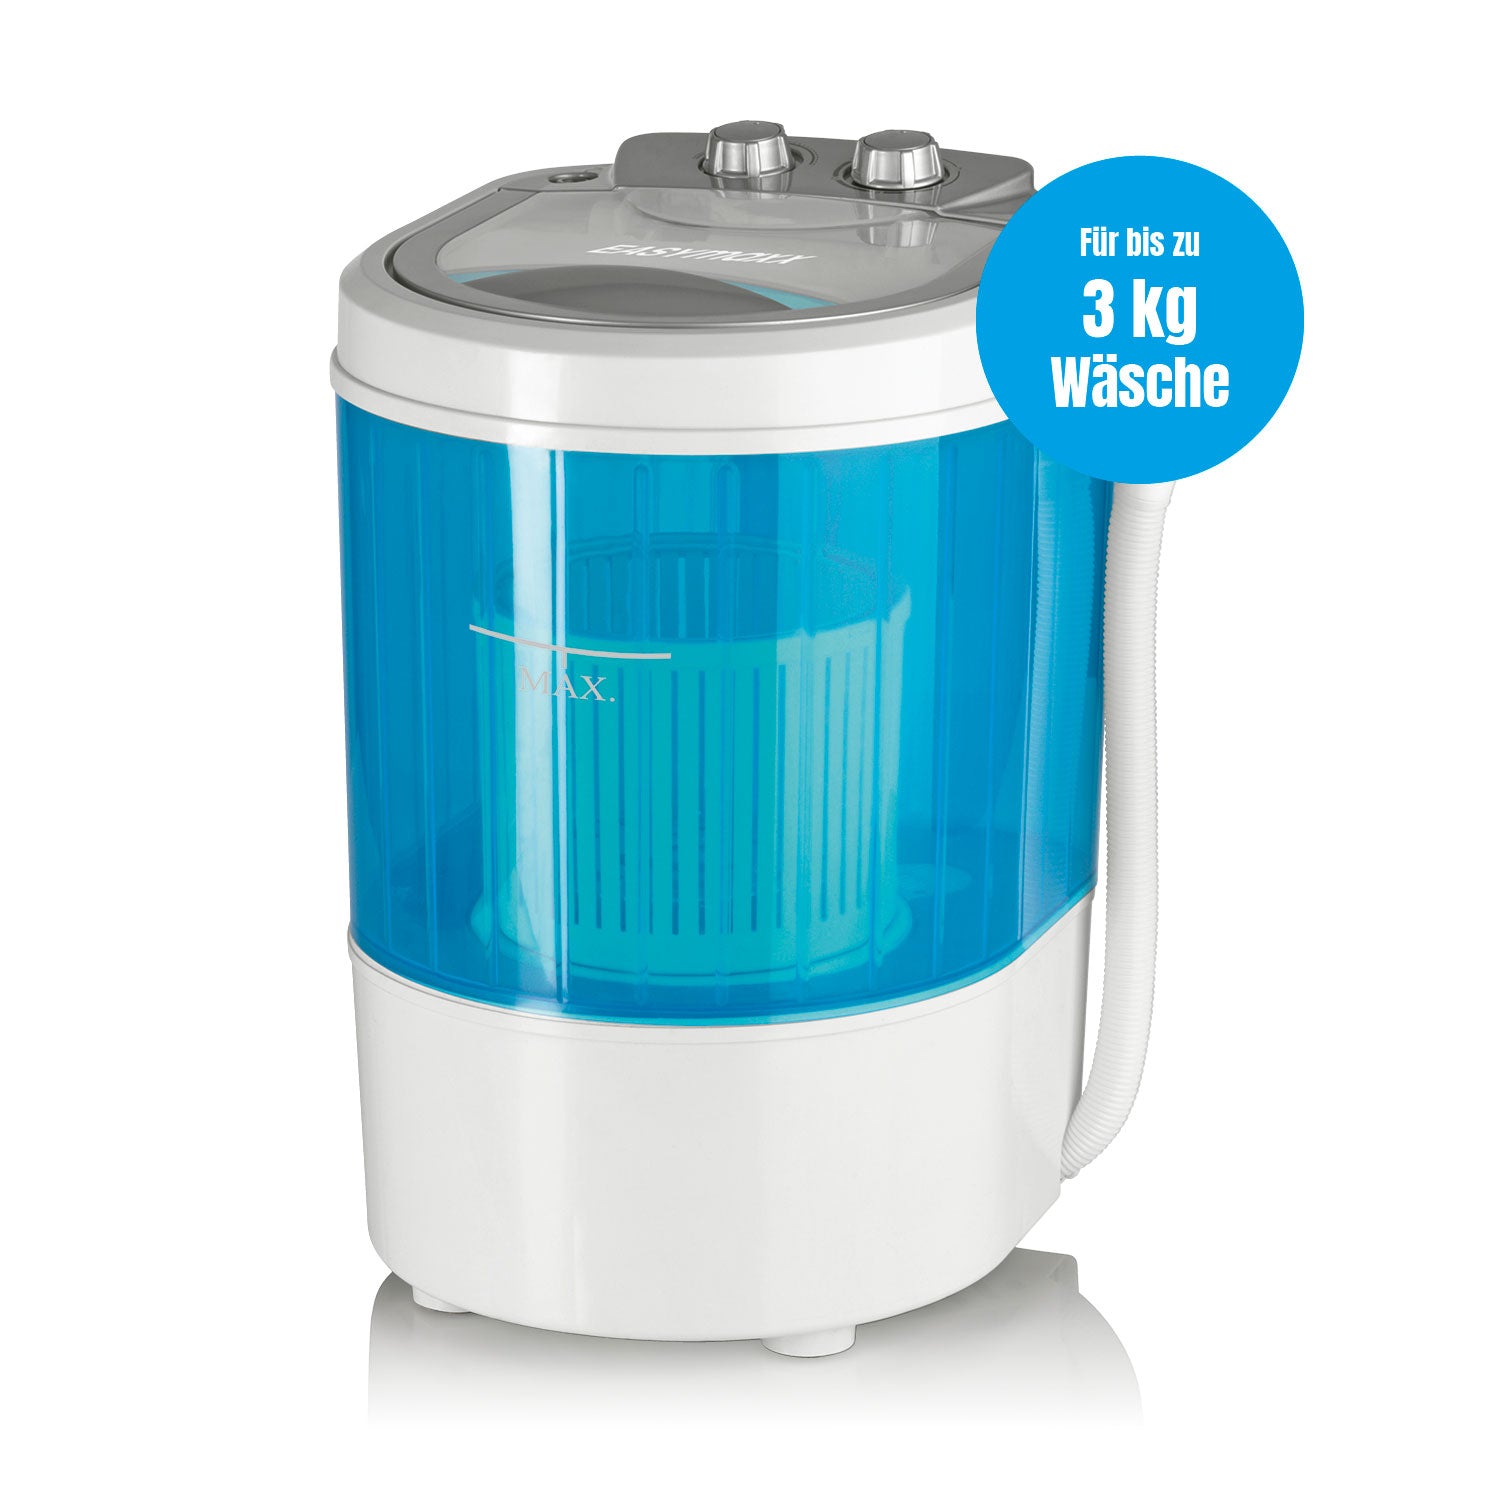 Mini-Waschmaschine - 260 Watt - weiß/blau